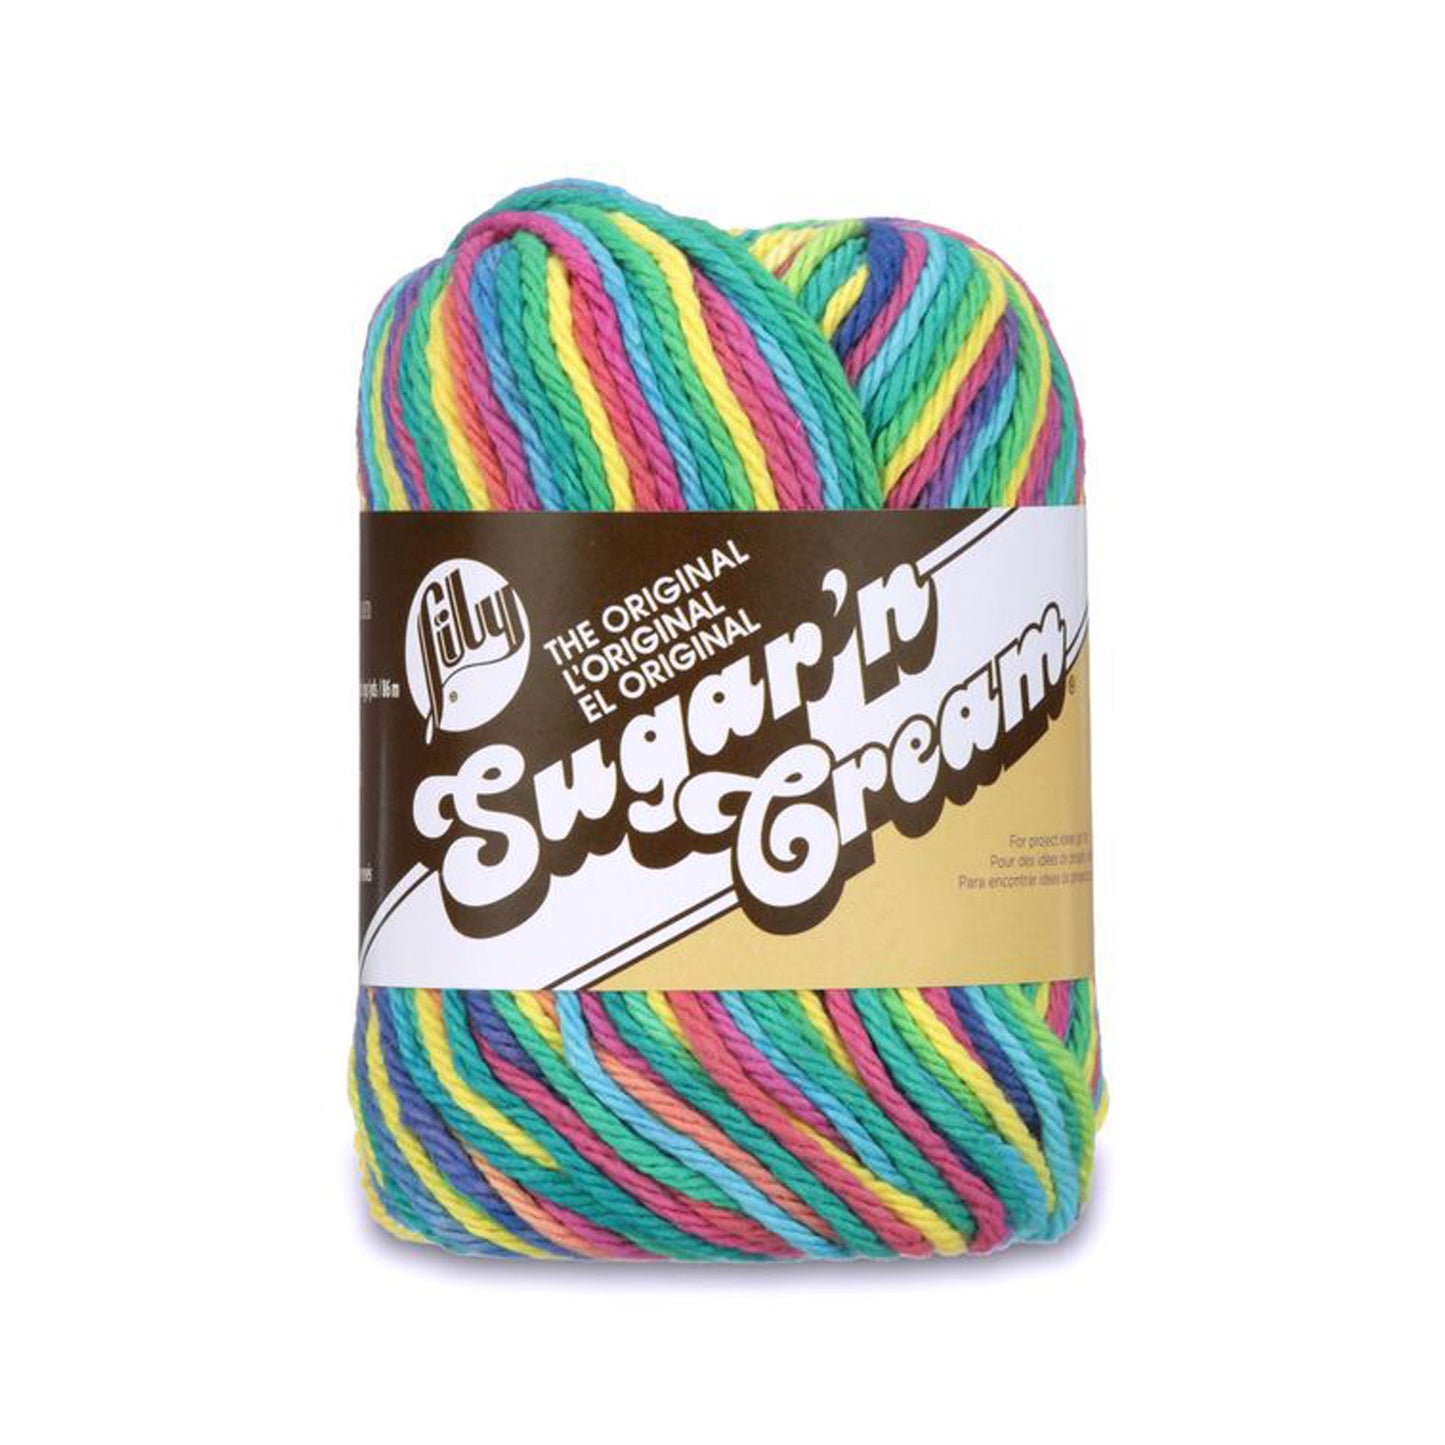 Lily Sugar'n Cream 100% Cotton yarn - Psychedelic SUPER SIZE